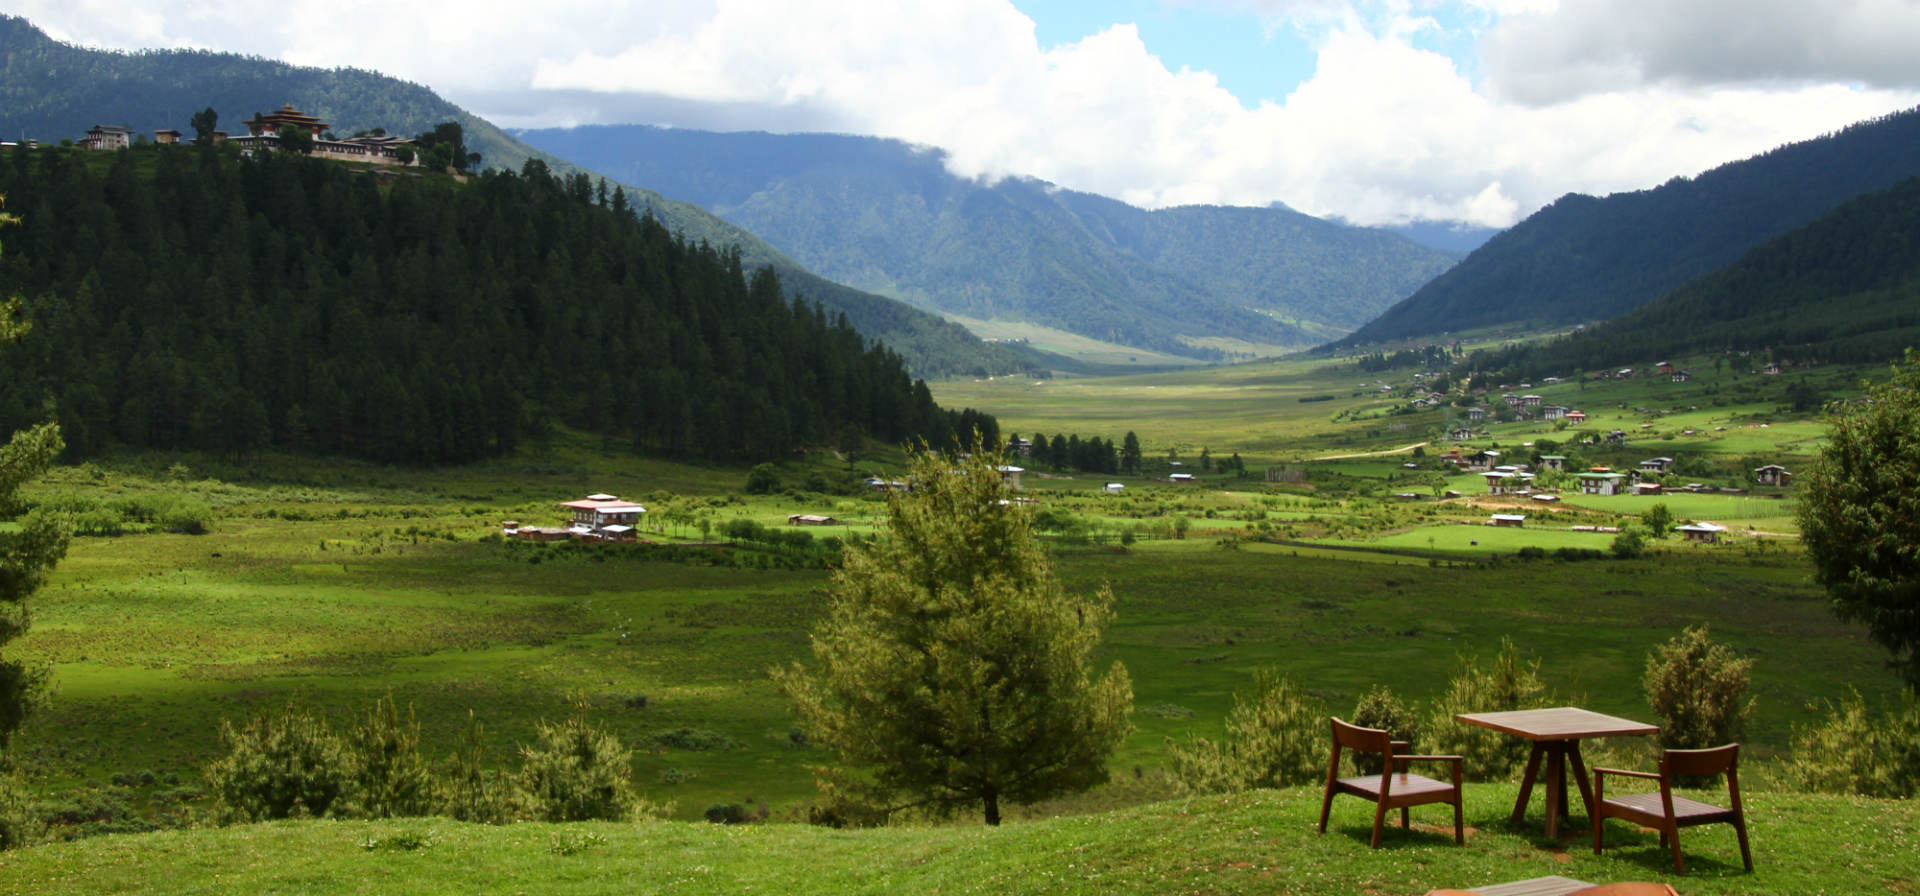 Bhutan at A Glance